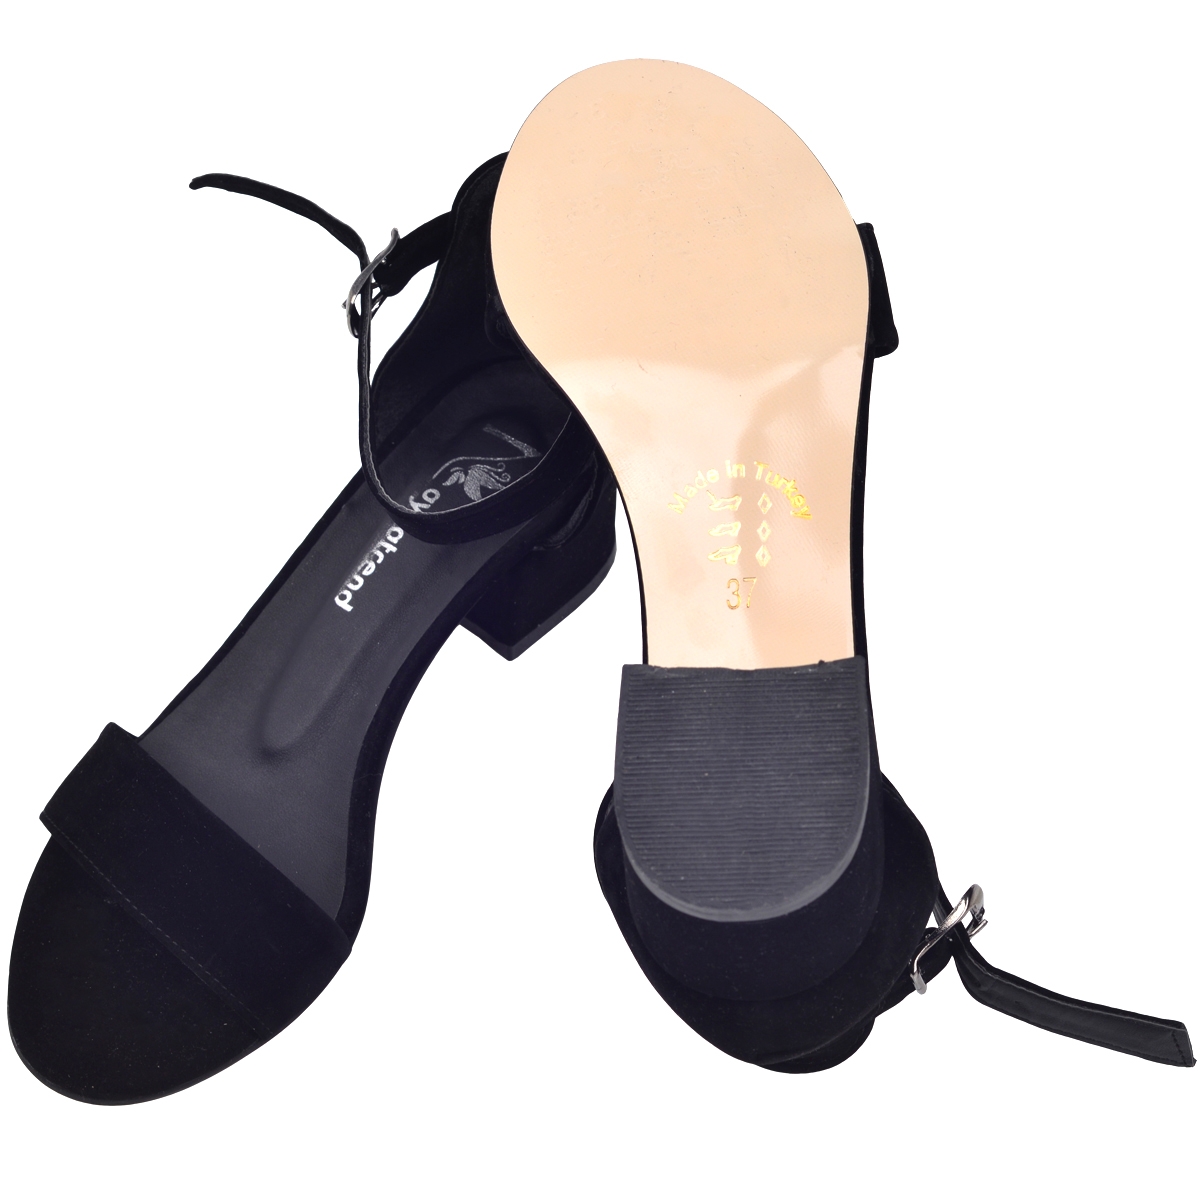 Flo 204-05 Süet 3 Cm Topuk Bayan Sandalet Ayakkabı Siyah. 5